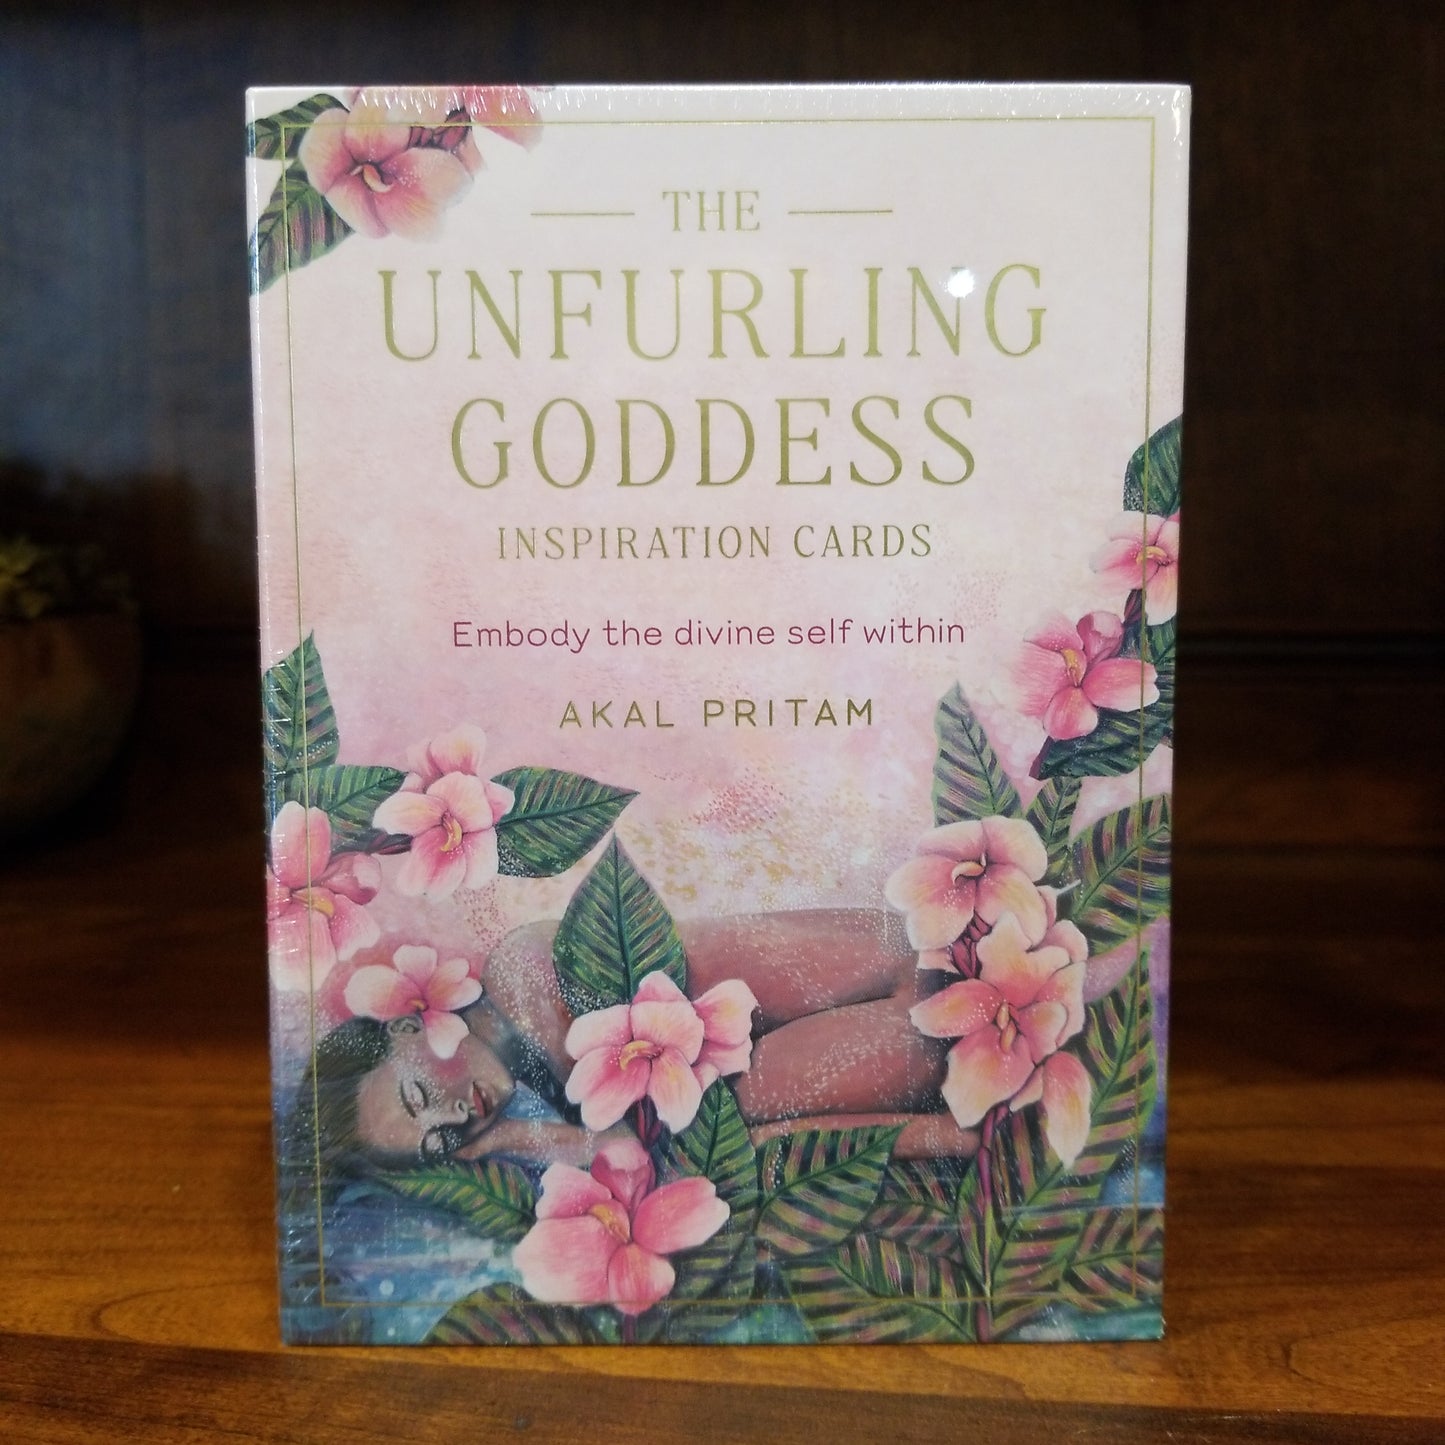 The Unfurling Goddess Inspiration Cards